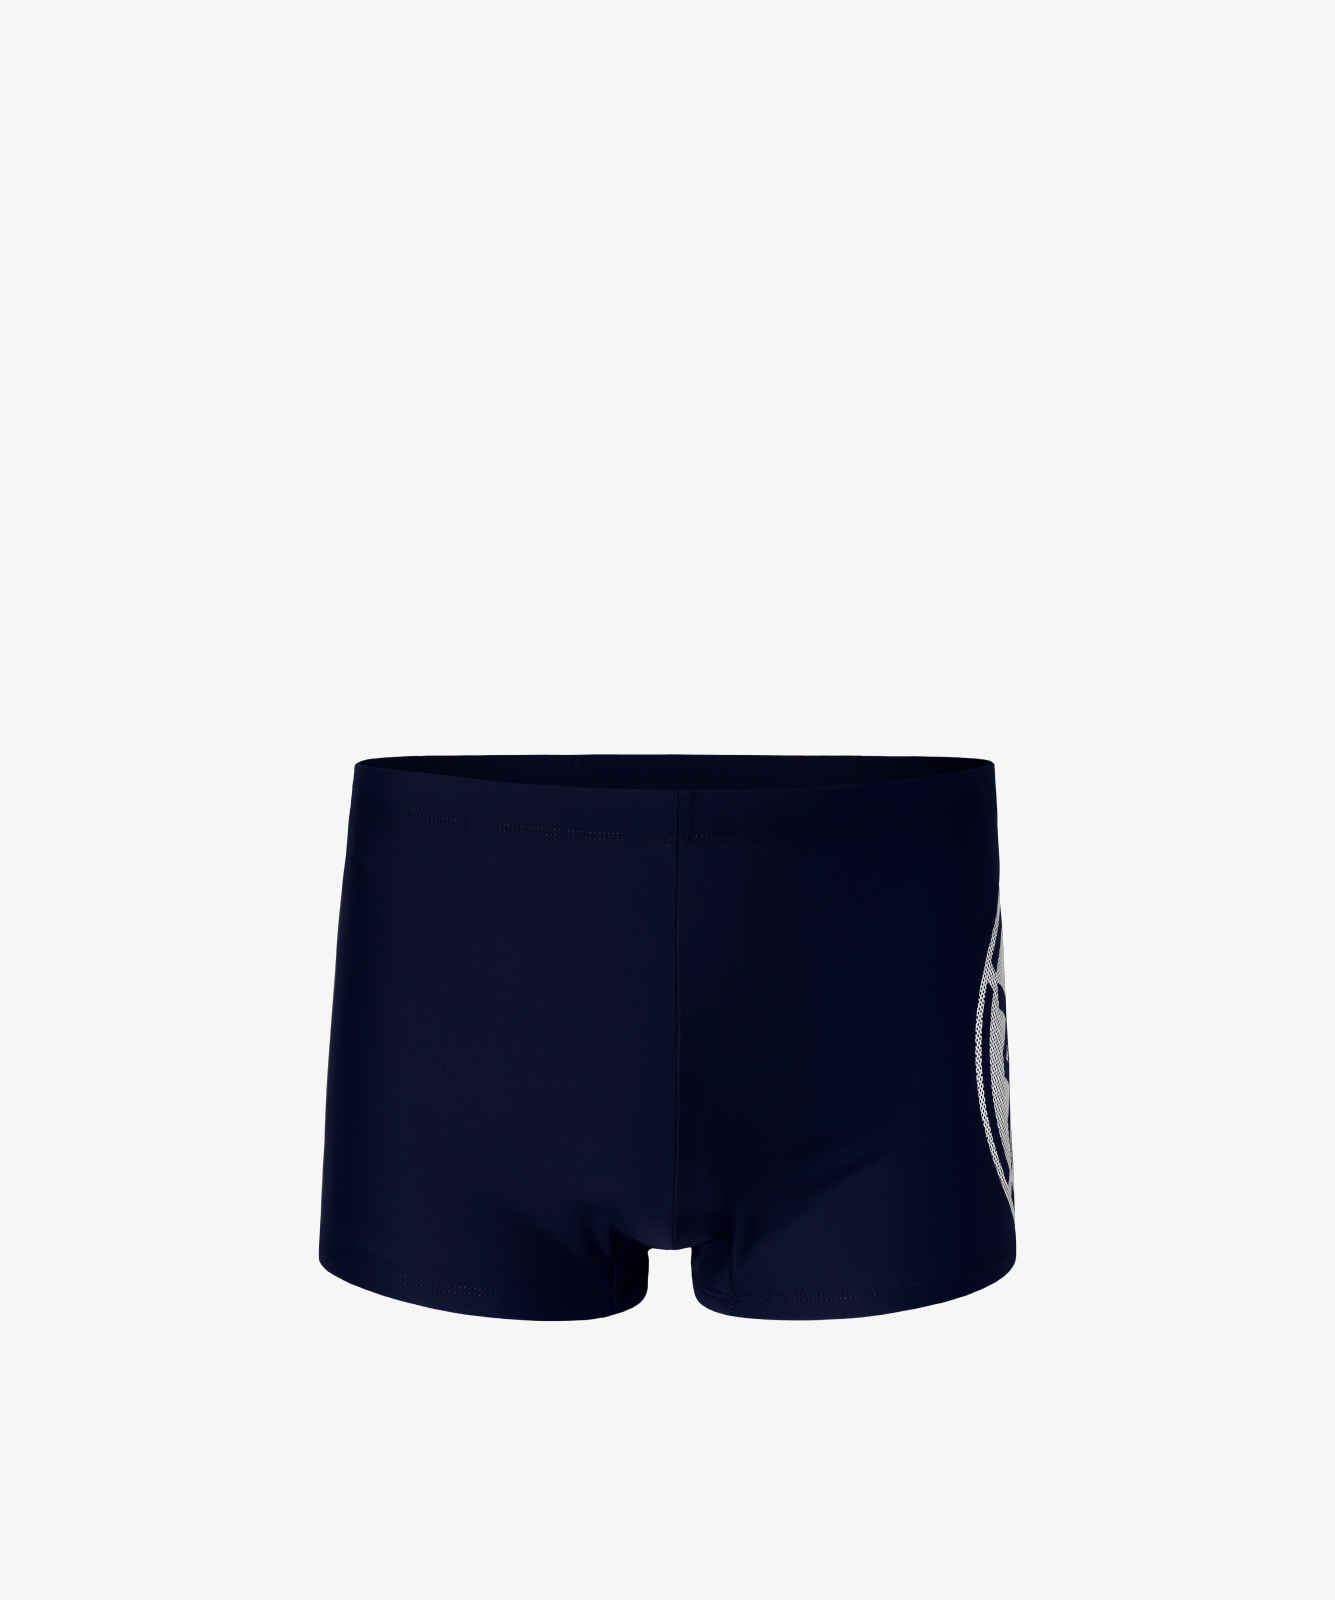 Men's Swimsuit Boxers ATLANTIC - dark blue